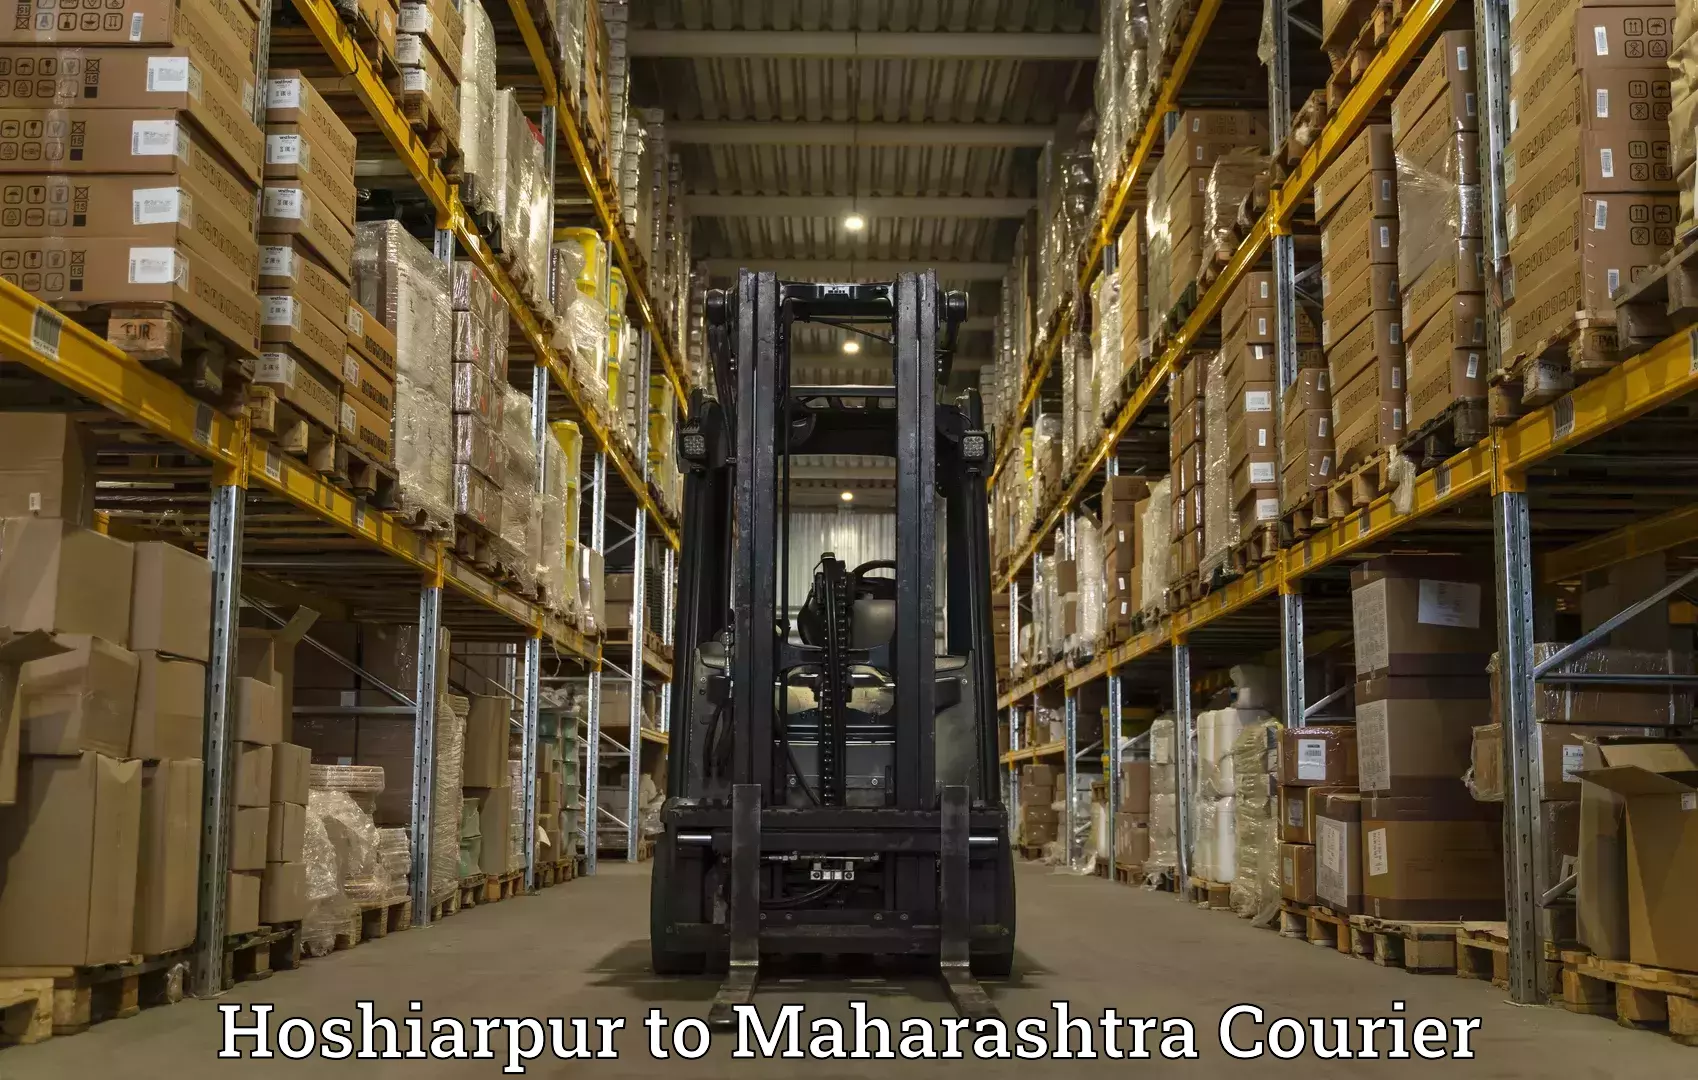 Courier service partnerships Hoshiarpur to IIT Mumbai